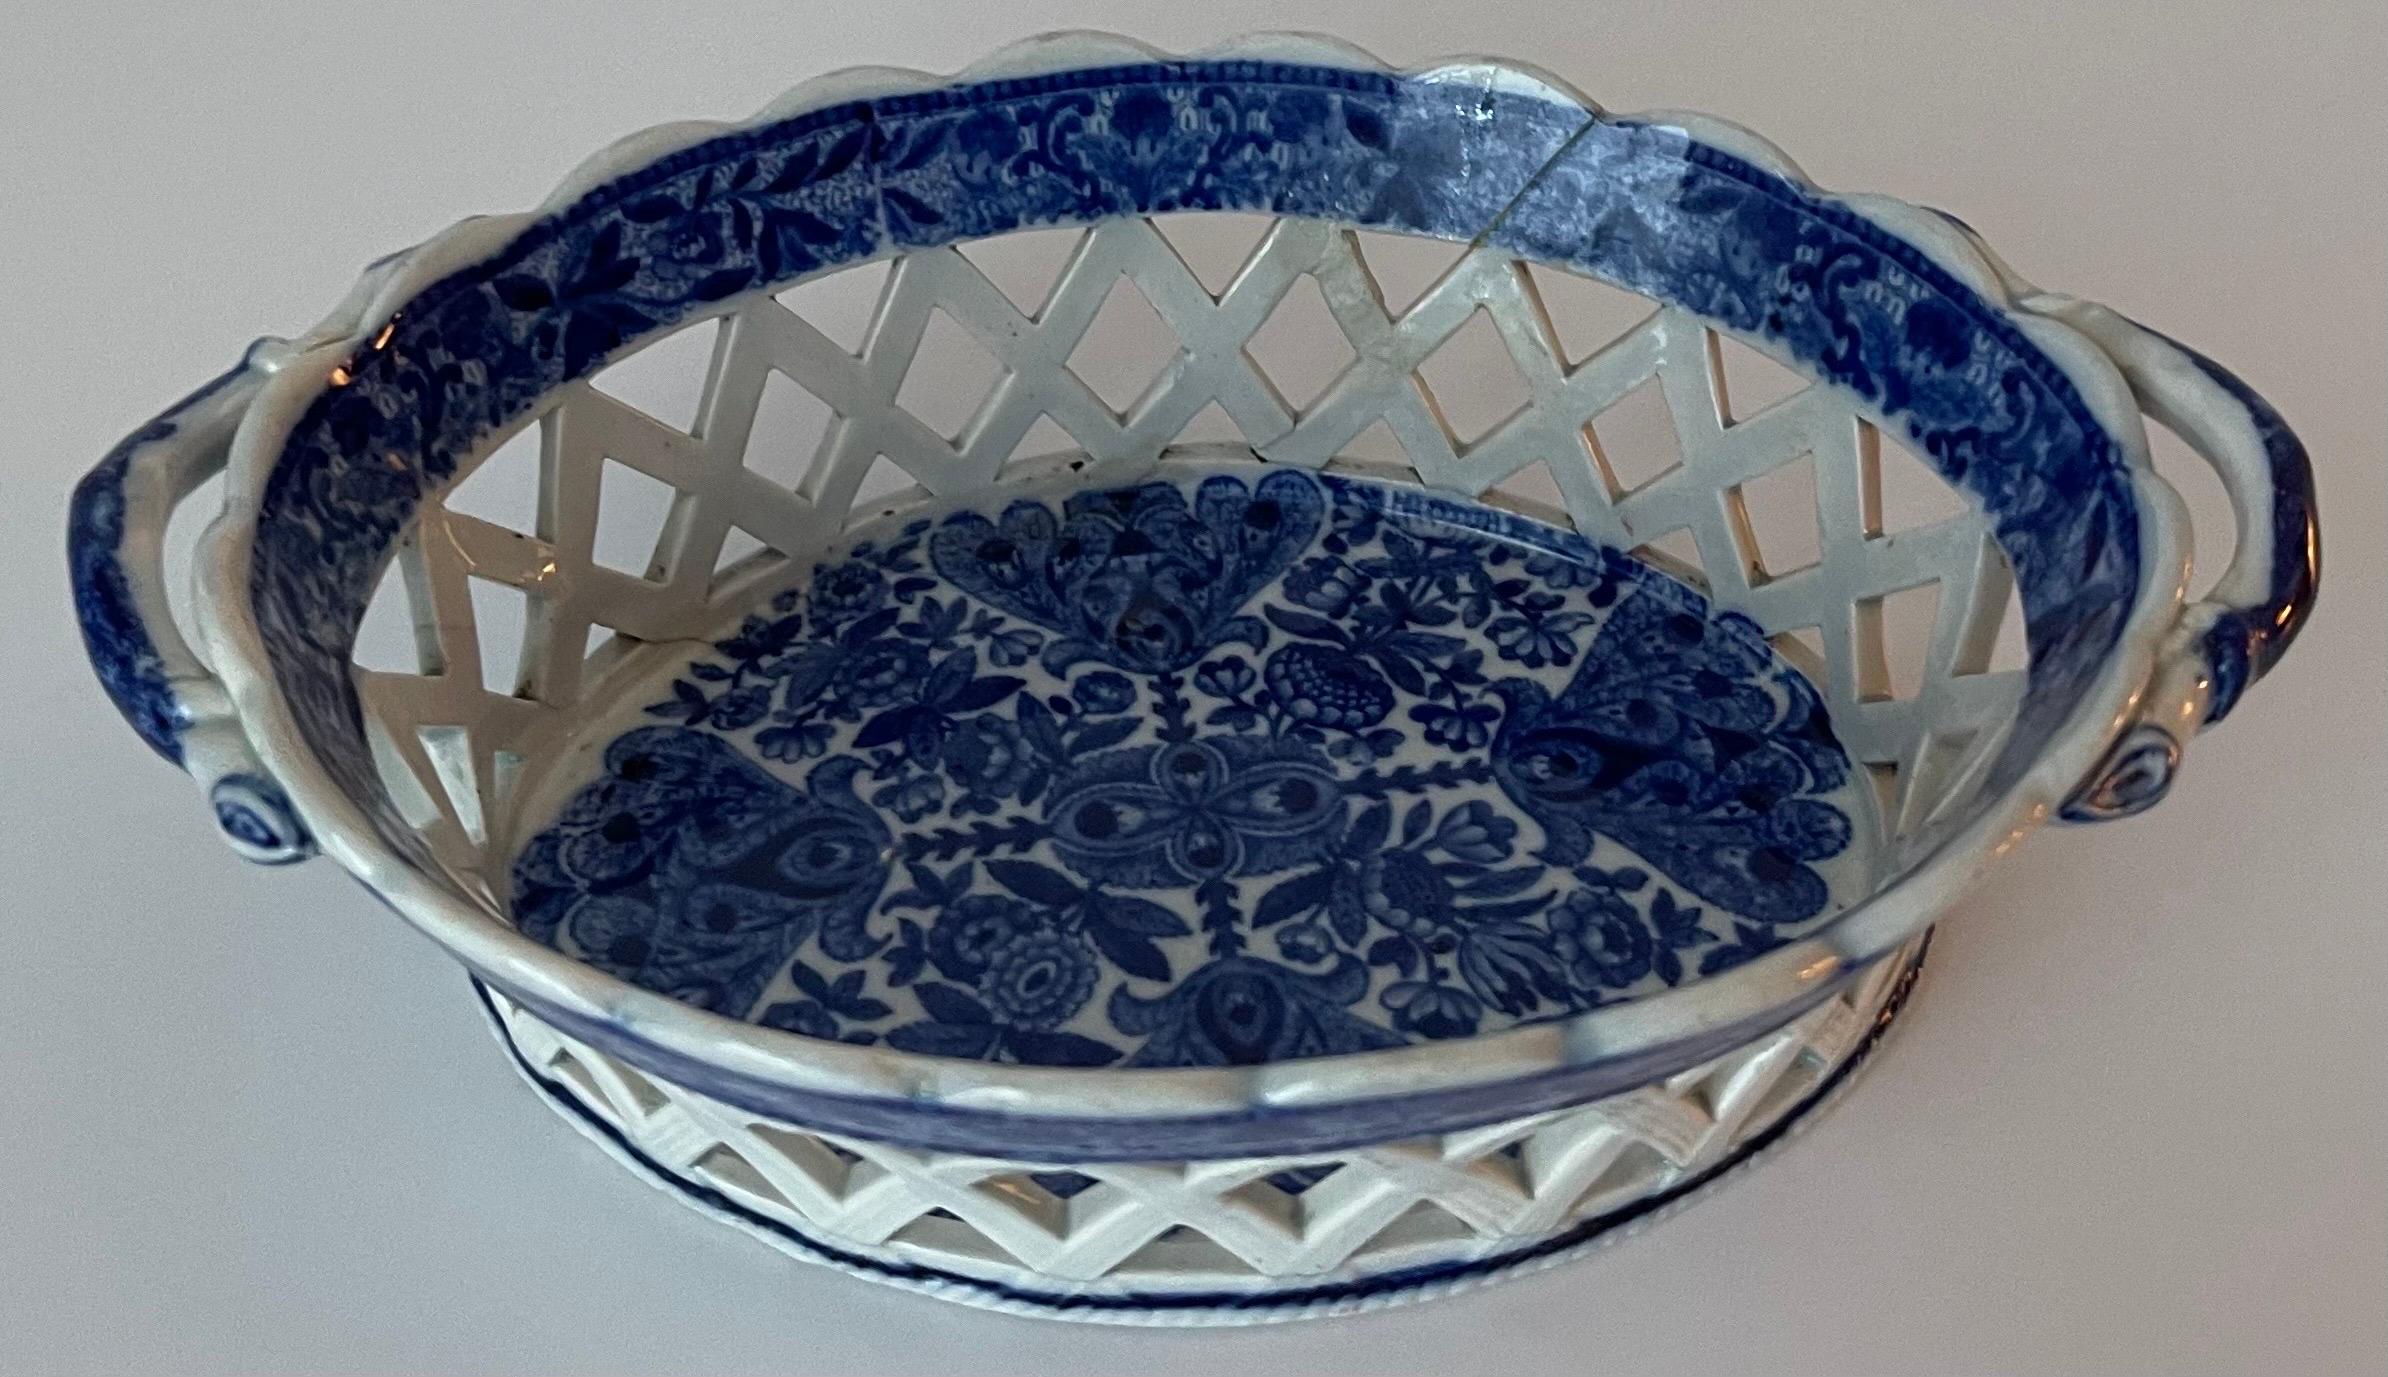 Antique Spode porcelain blue and white flower cross pattern chestnut basket.